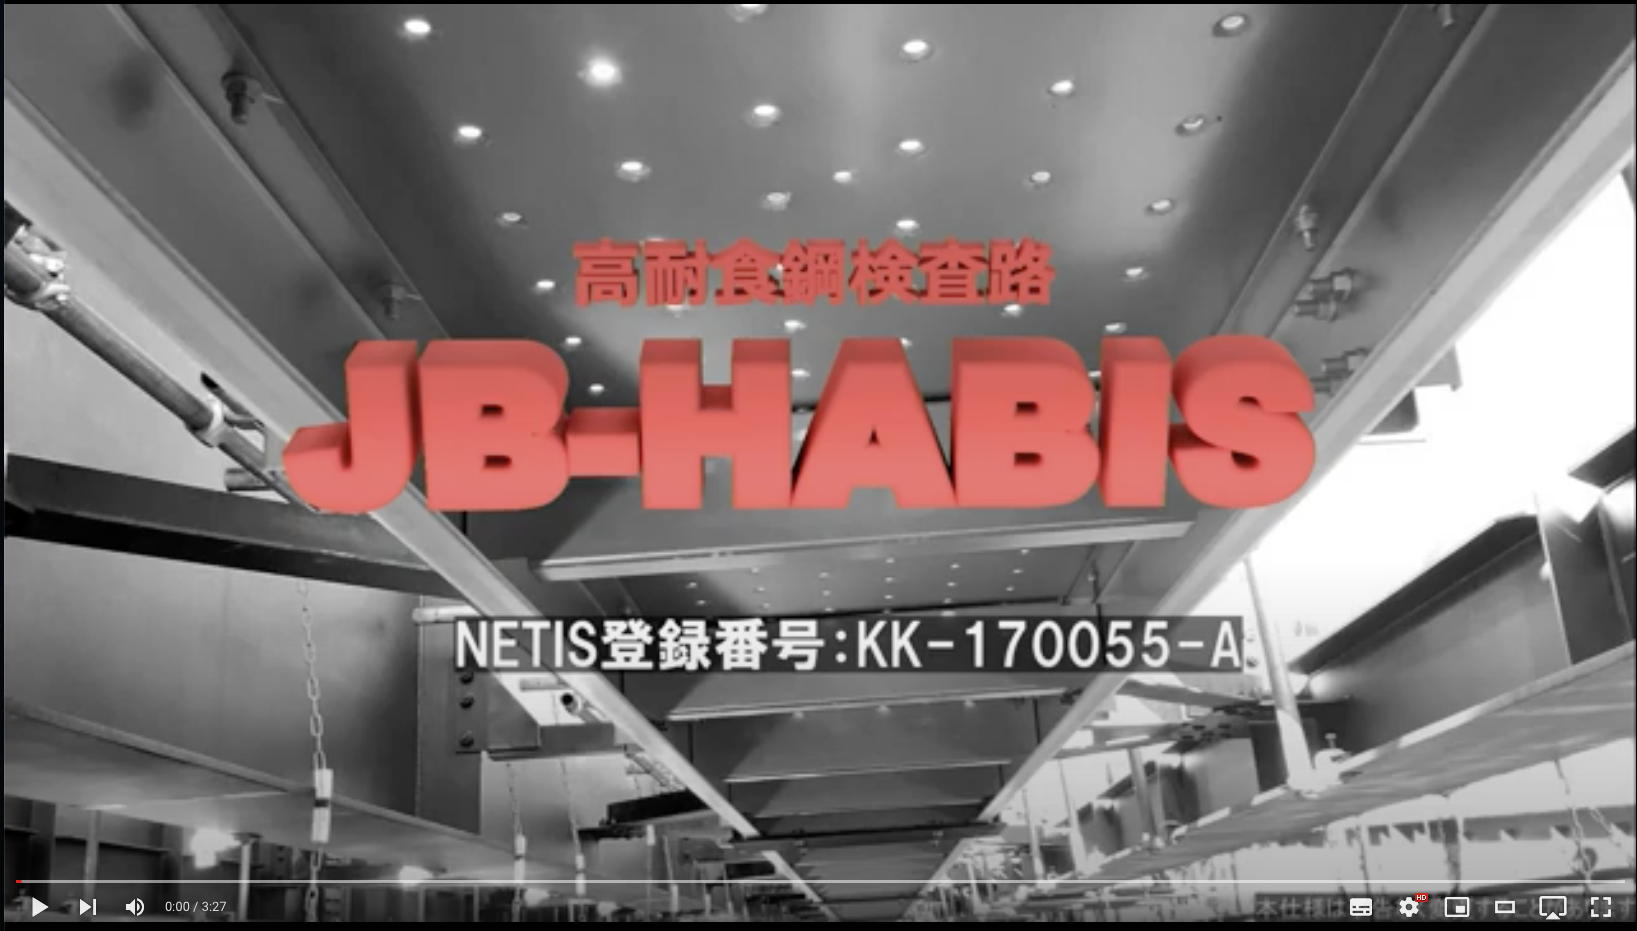 JB-HABIS